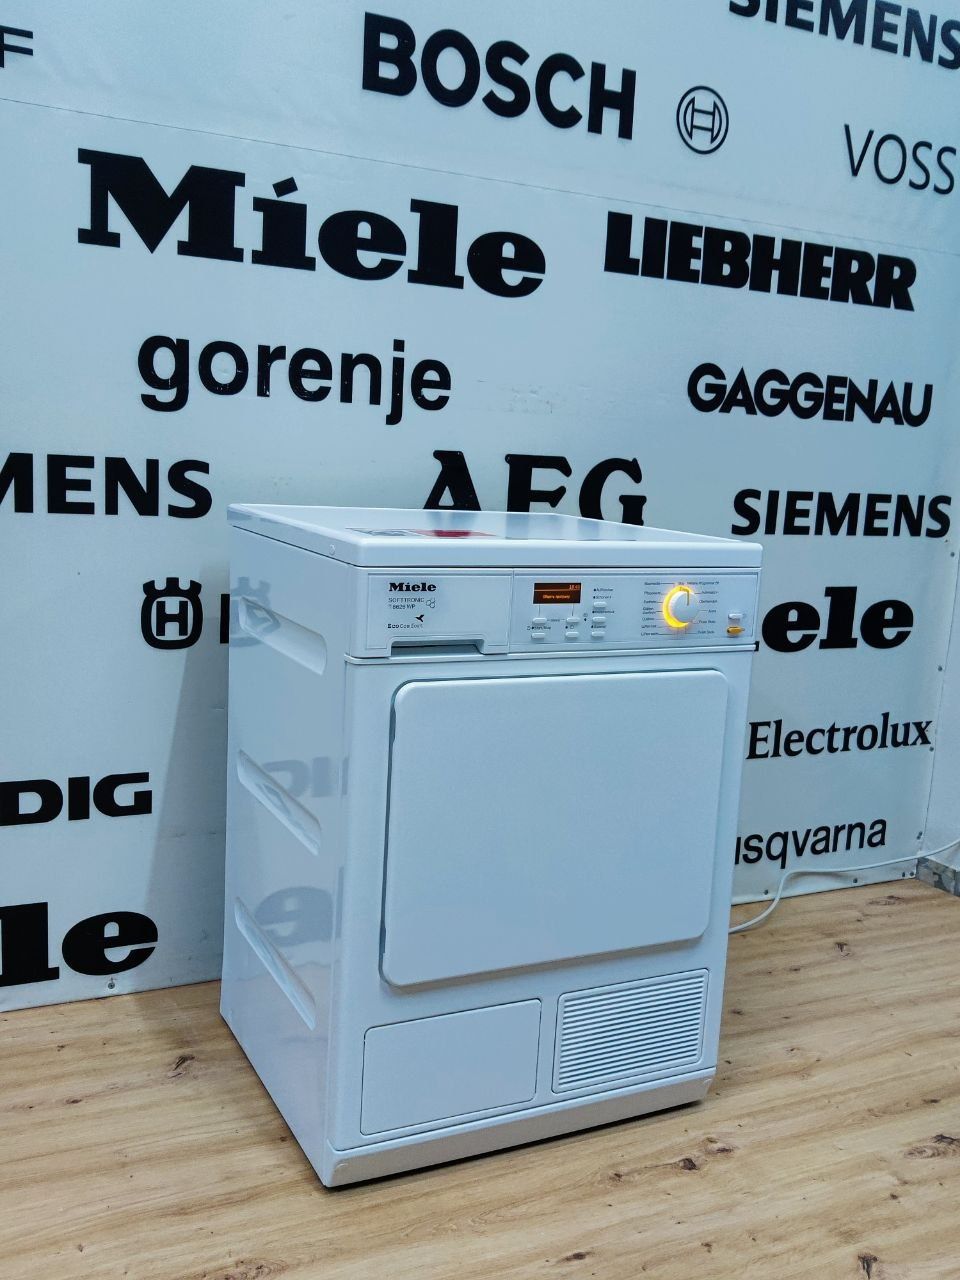 Сушка Miele™ T8626WP EcoComfort, сушильная машина. ТЕКСТ.МЕНЮ. Germany